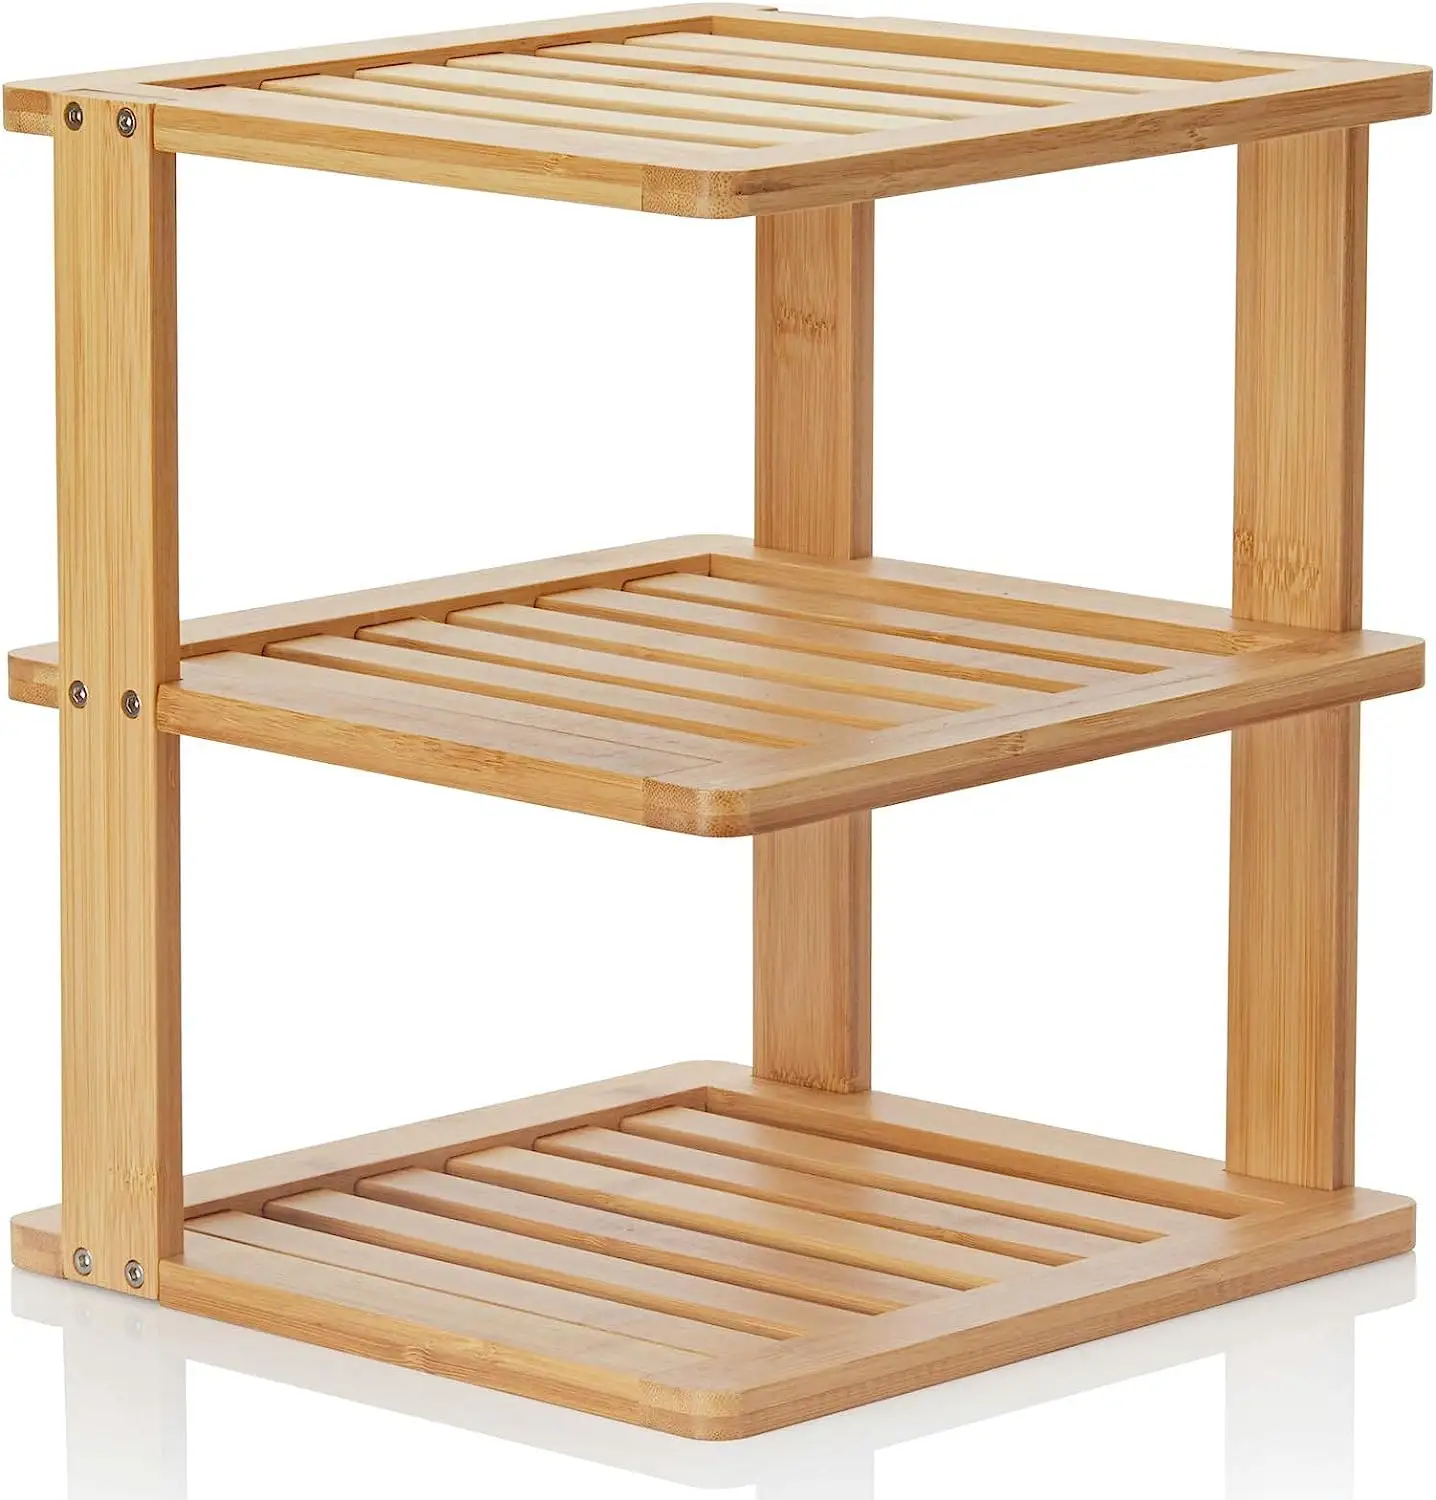 Bamboo Corner Shelf - 3 Tier 10 x 10 inch and 11.5 inches high. Kitchen Cabinet Organizer - Pantry Organization and Storage